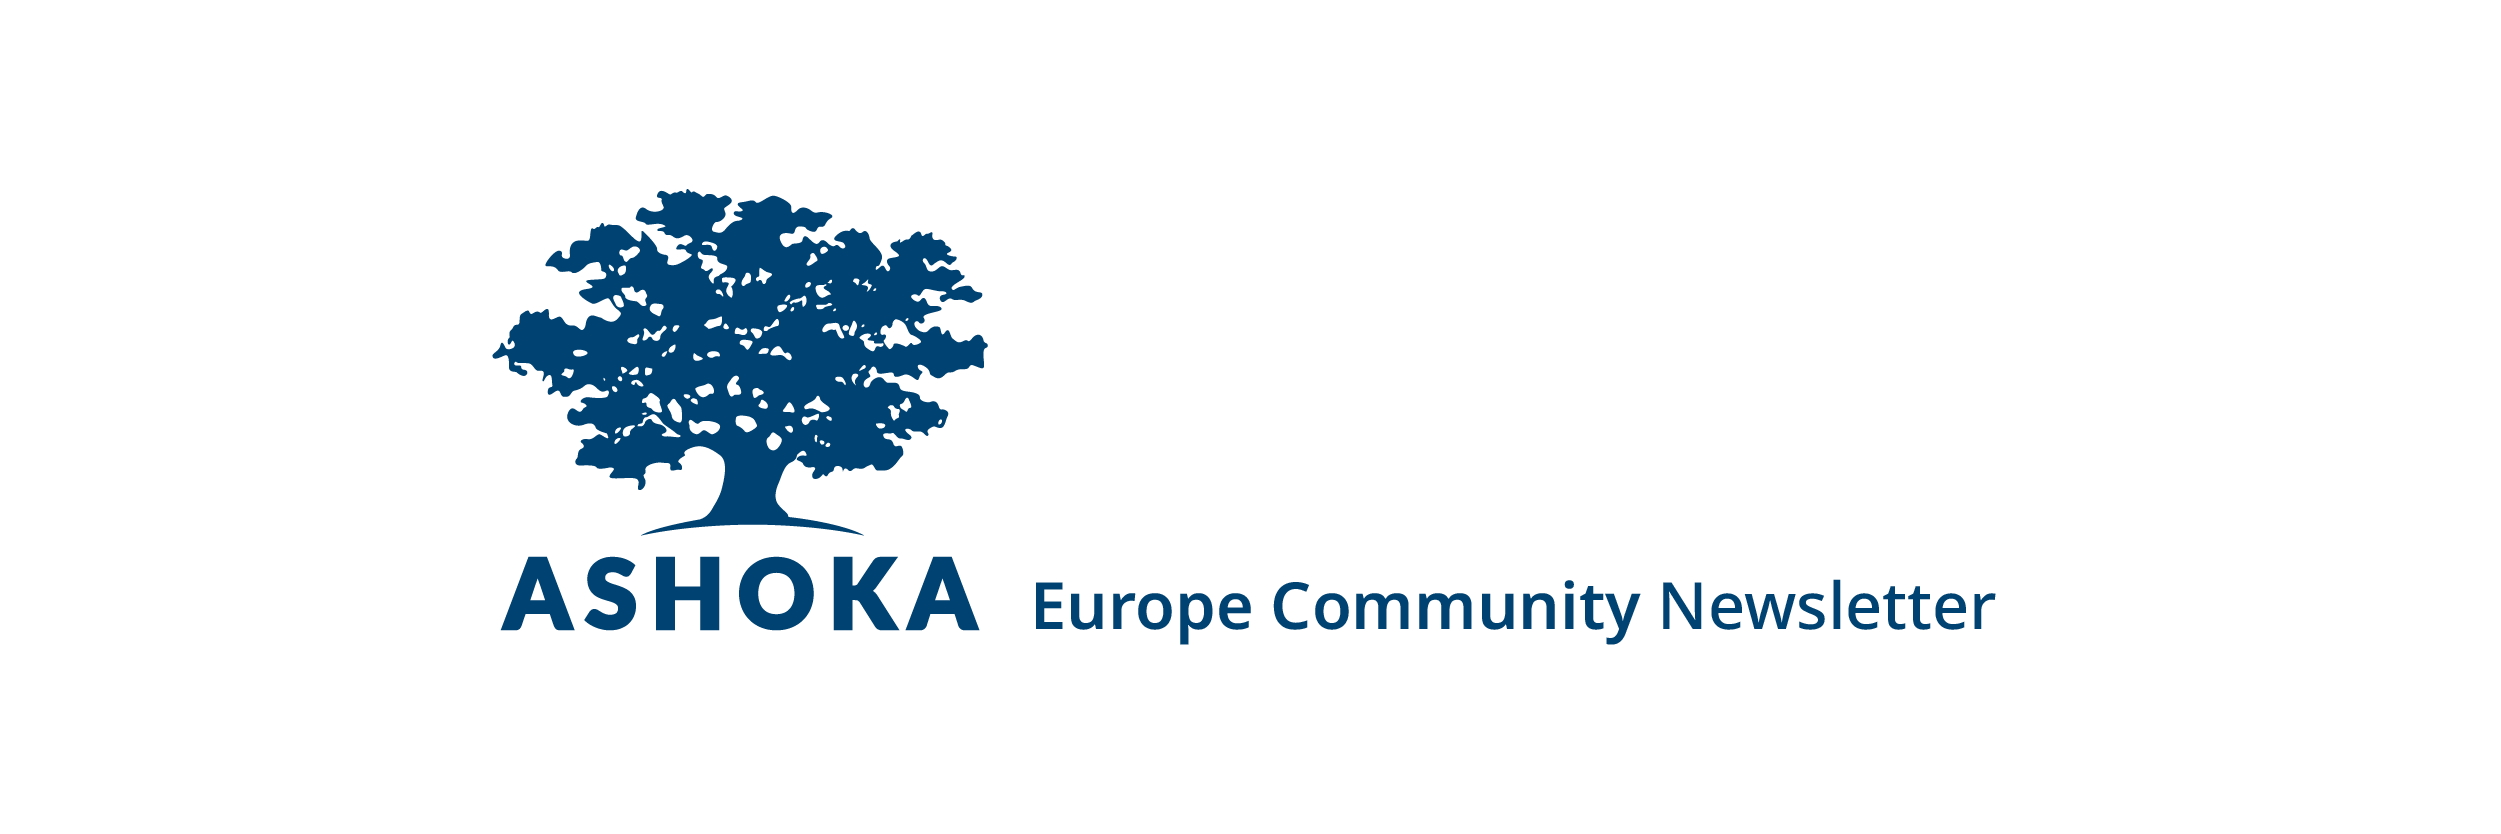 Ashoka One Community Newsletter Logo